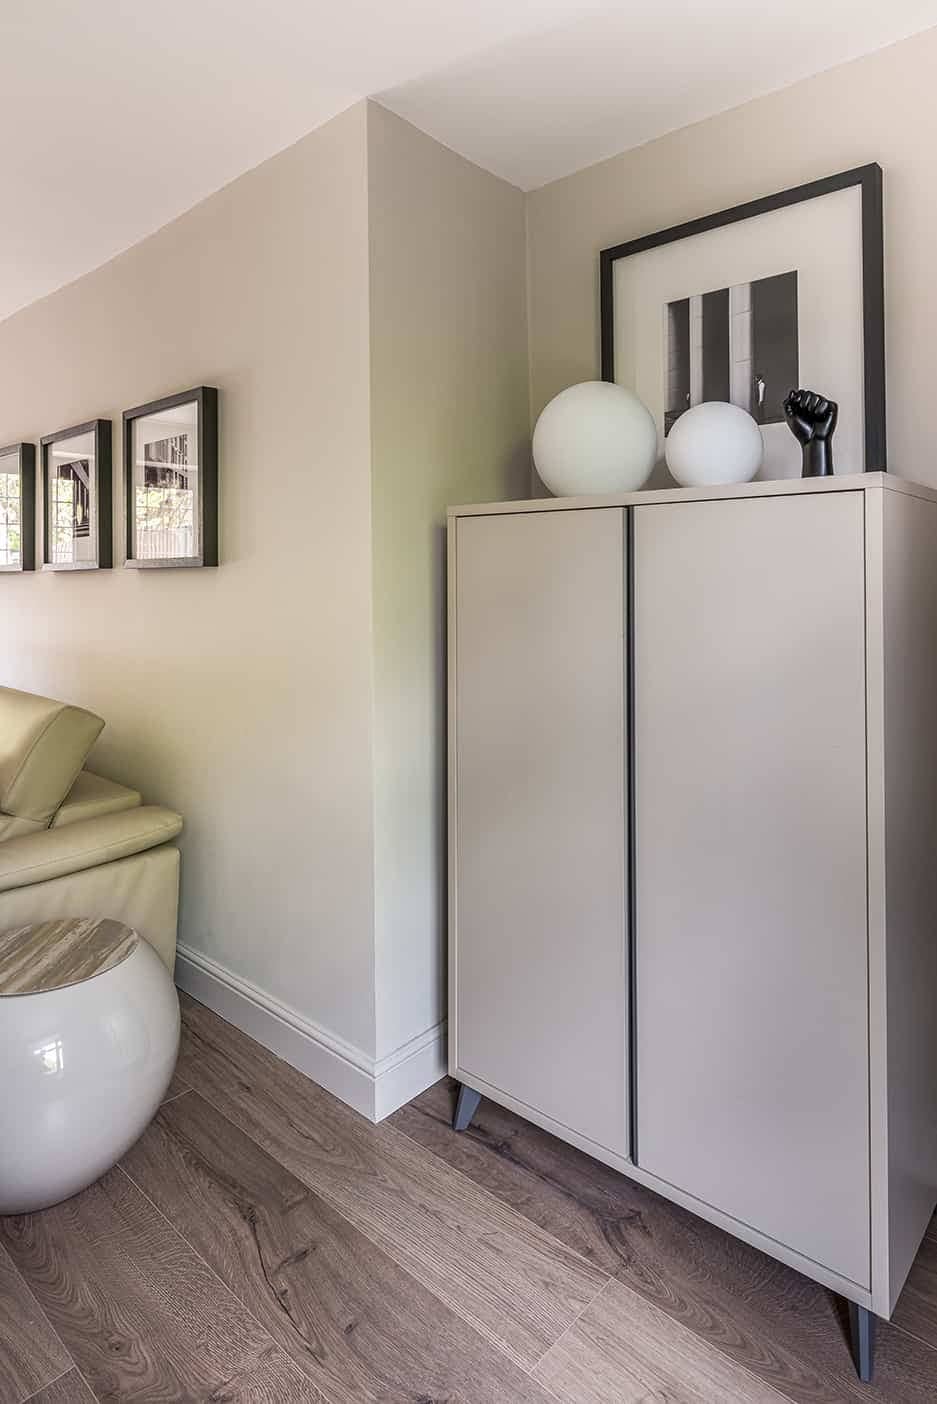 Essex Interior Design for Living Room Cabinet